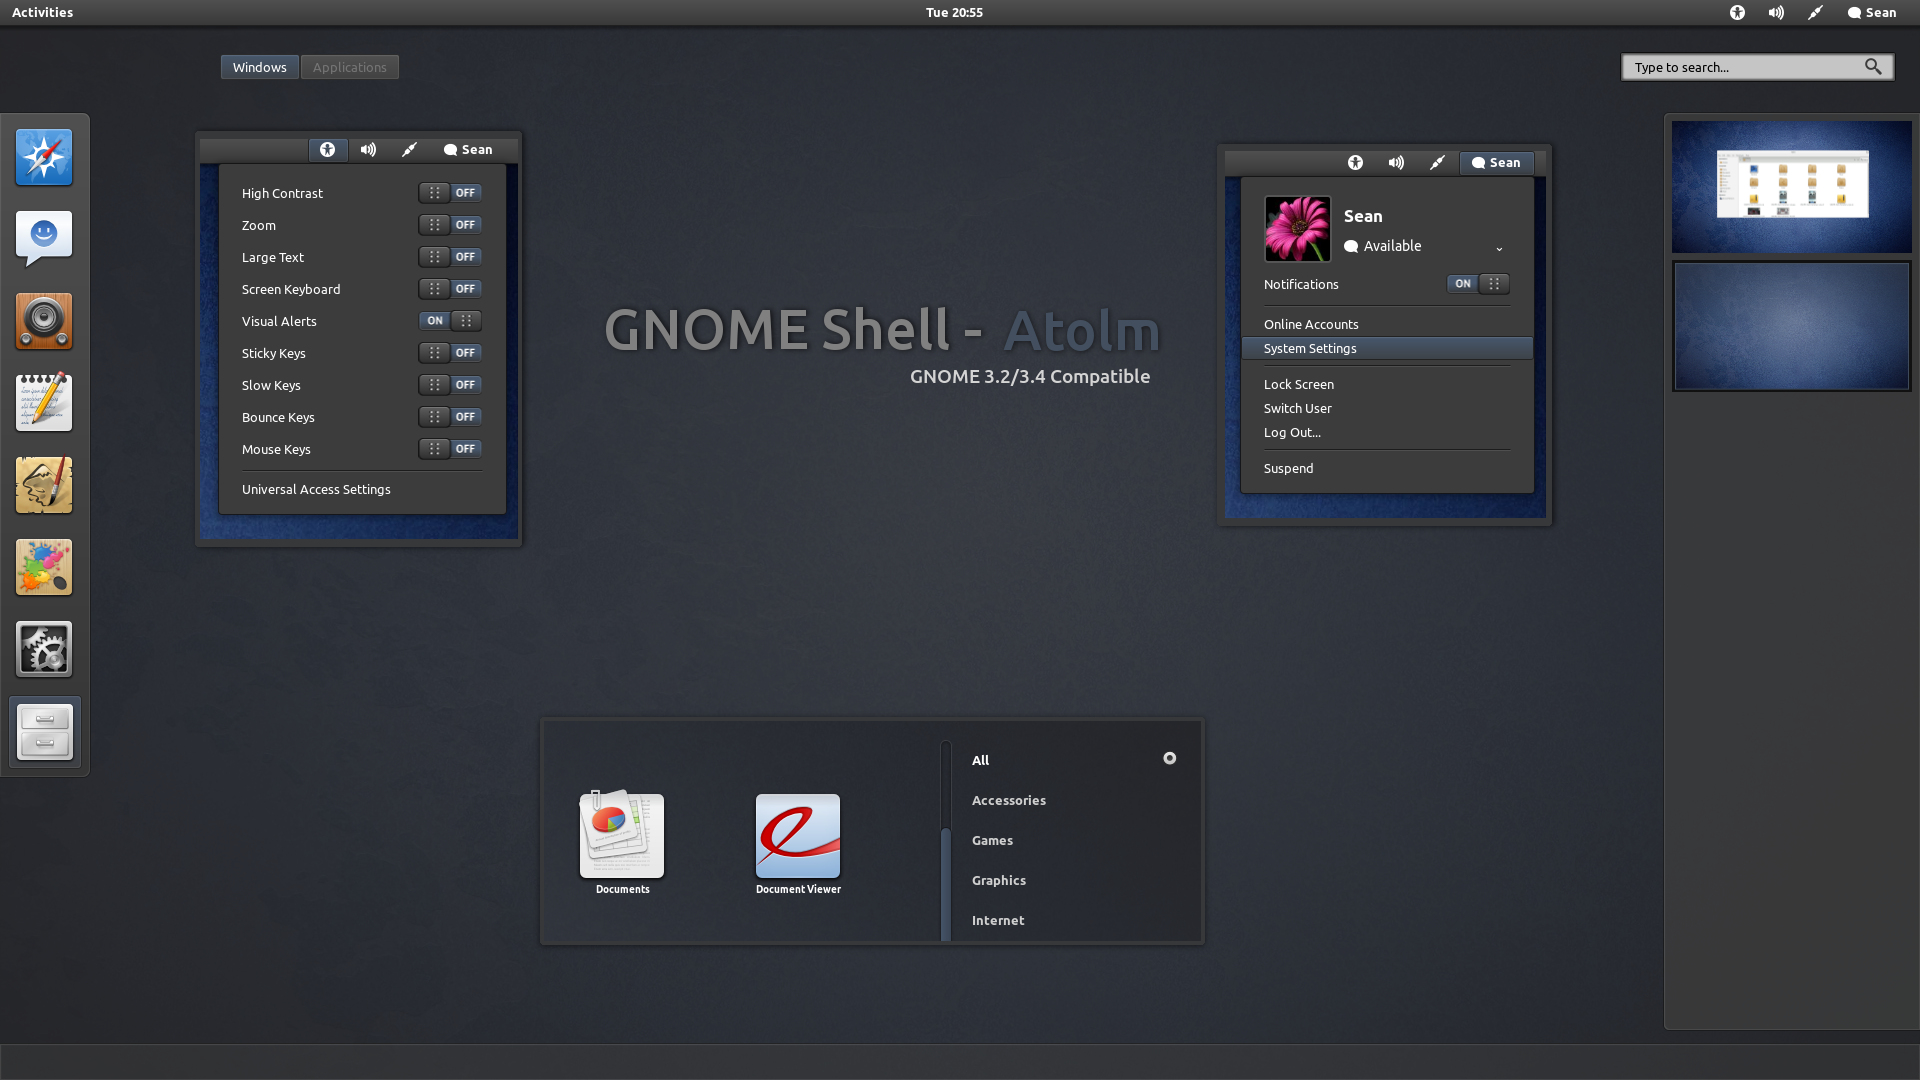 GNOME Shell  - Atolm